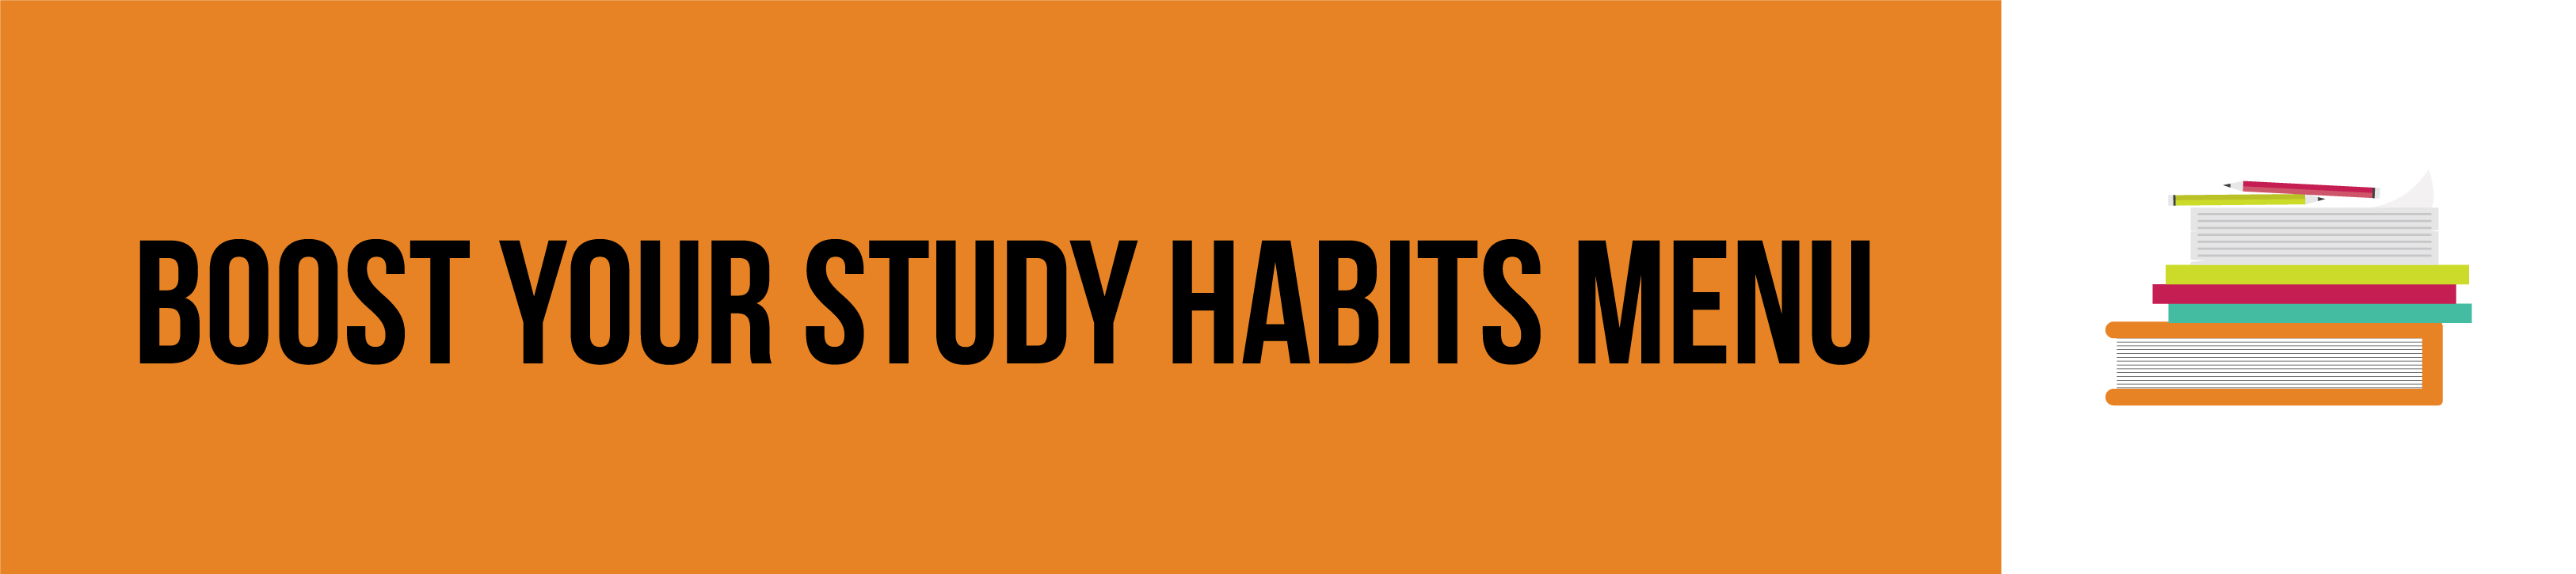 Boost Your Study Habits Menu